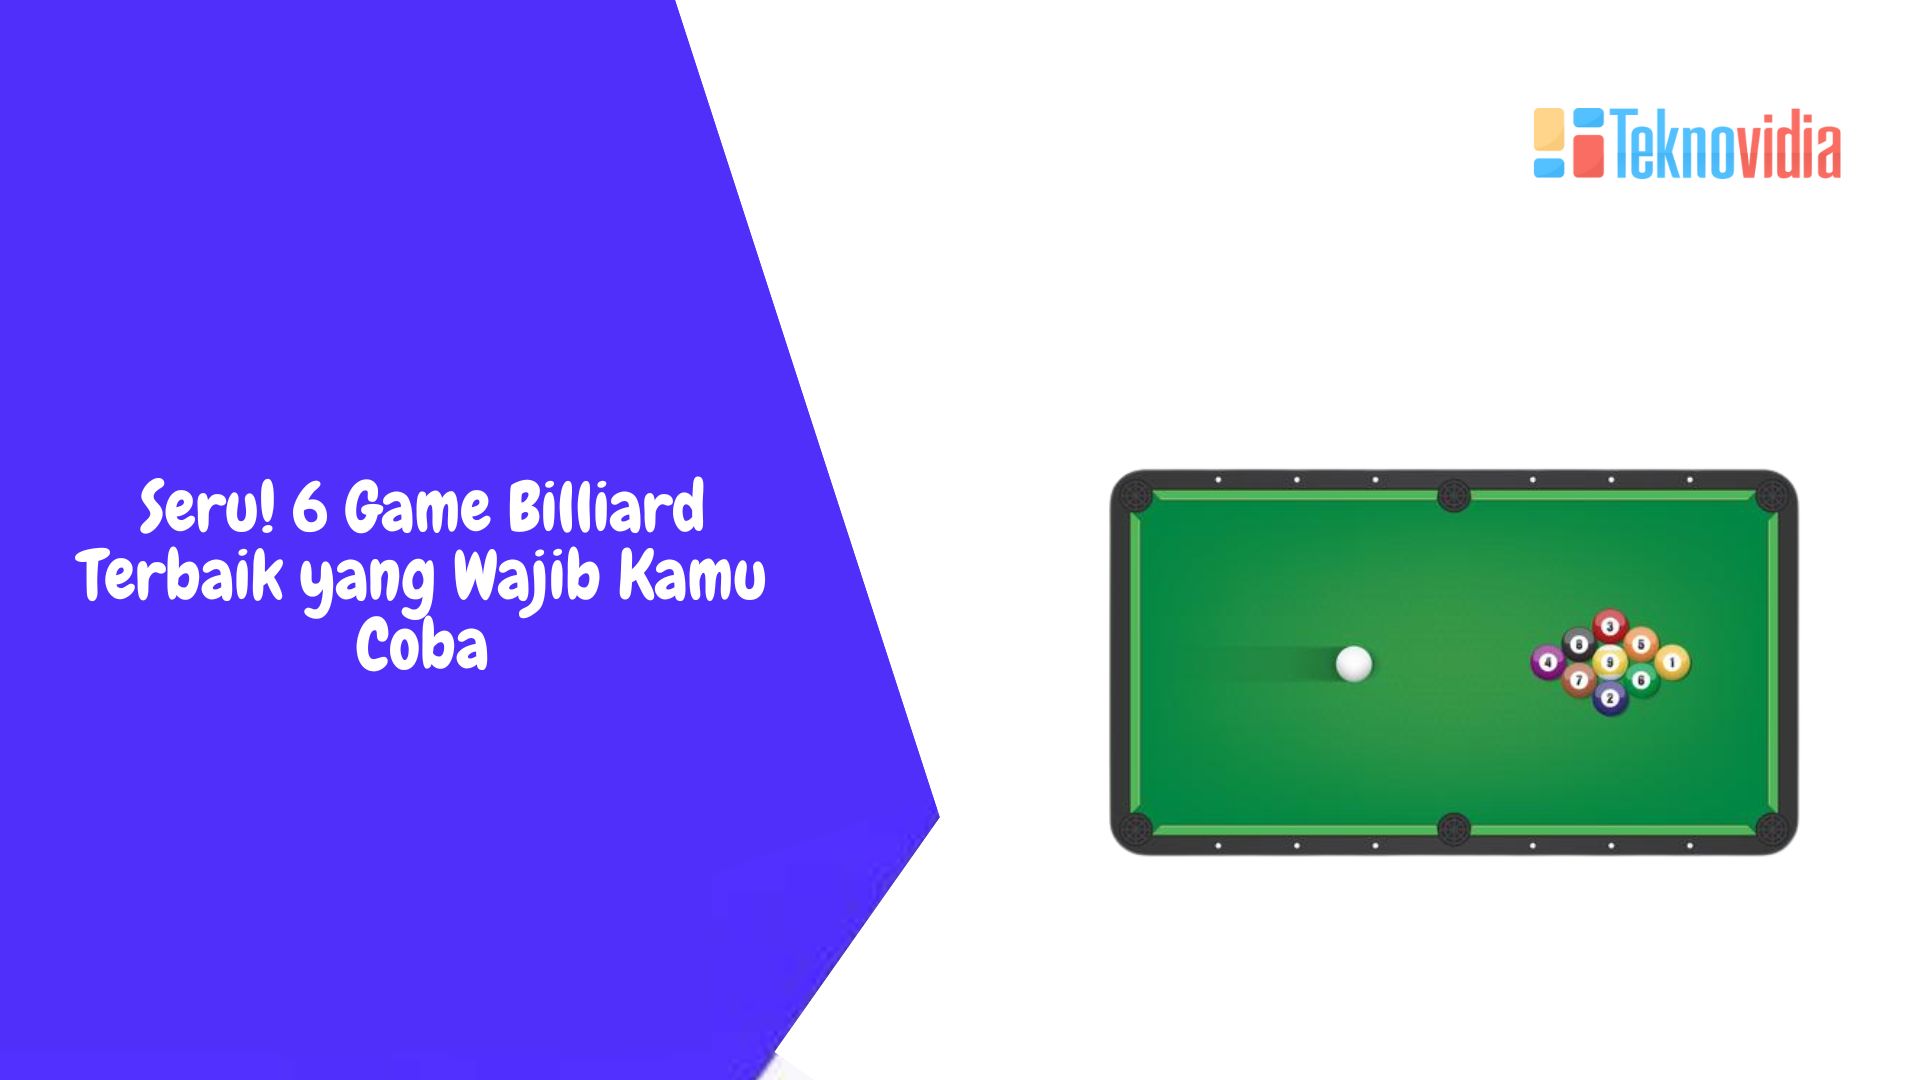 Seru! 6 Game Billiard Terbaik yang Wajib Kamu Coba